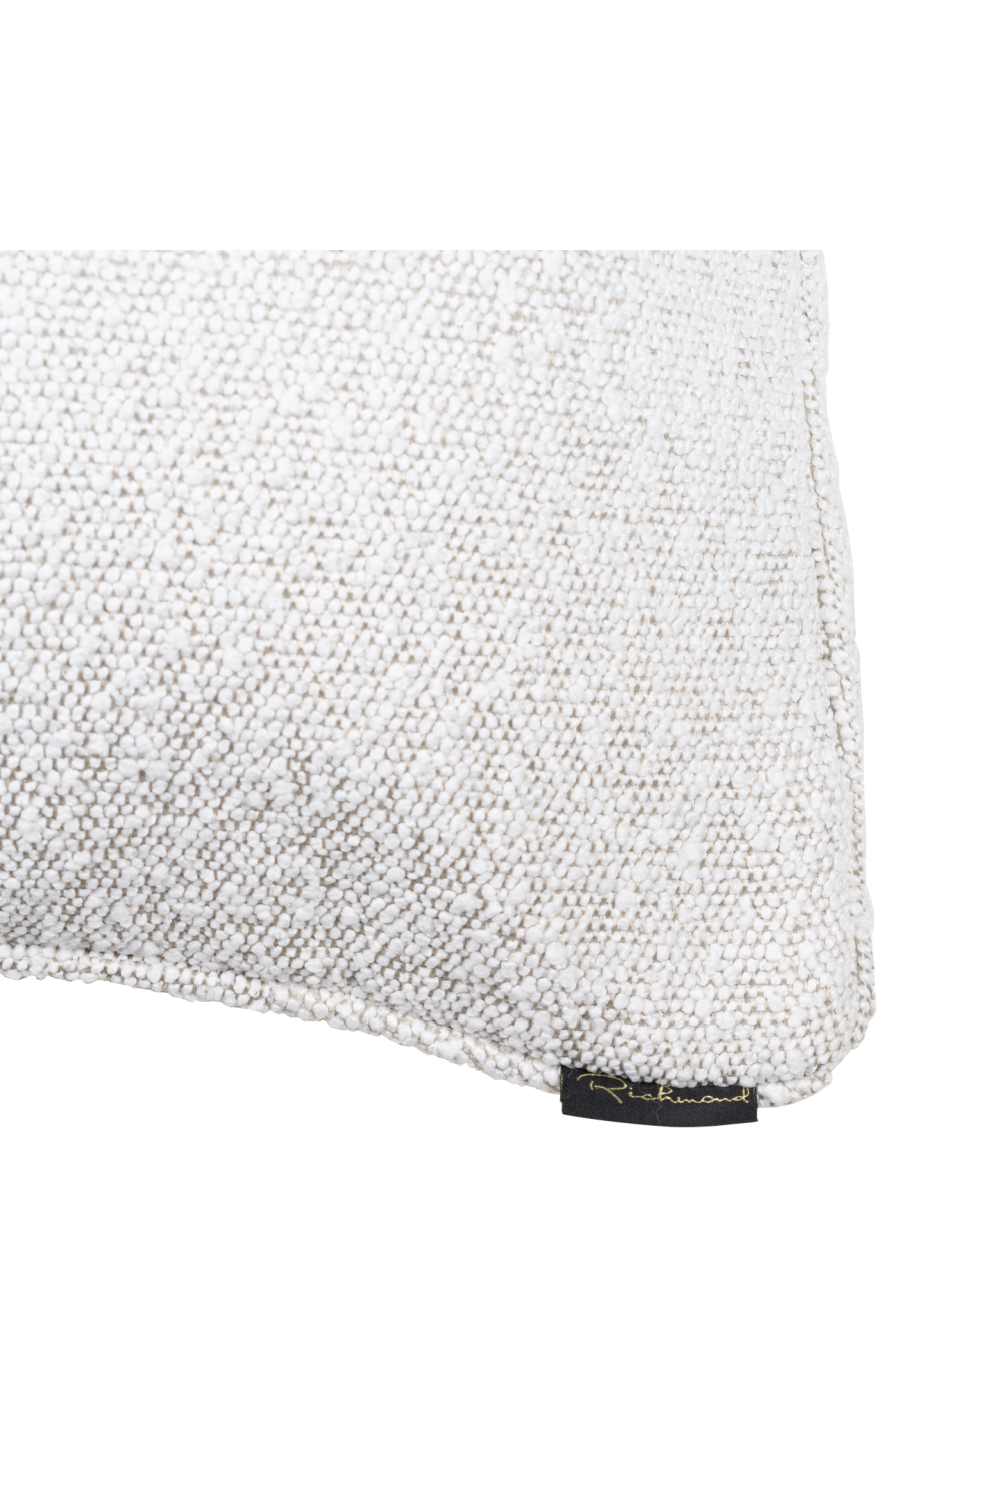 Rectangular White Bouclé Pillow | OROA Jayda | OROA.com